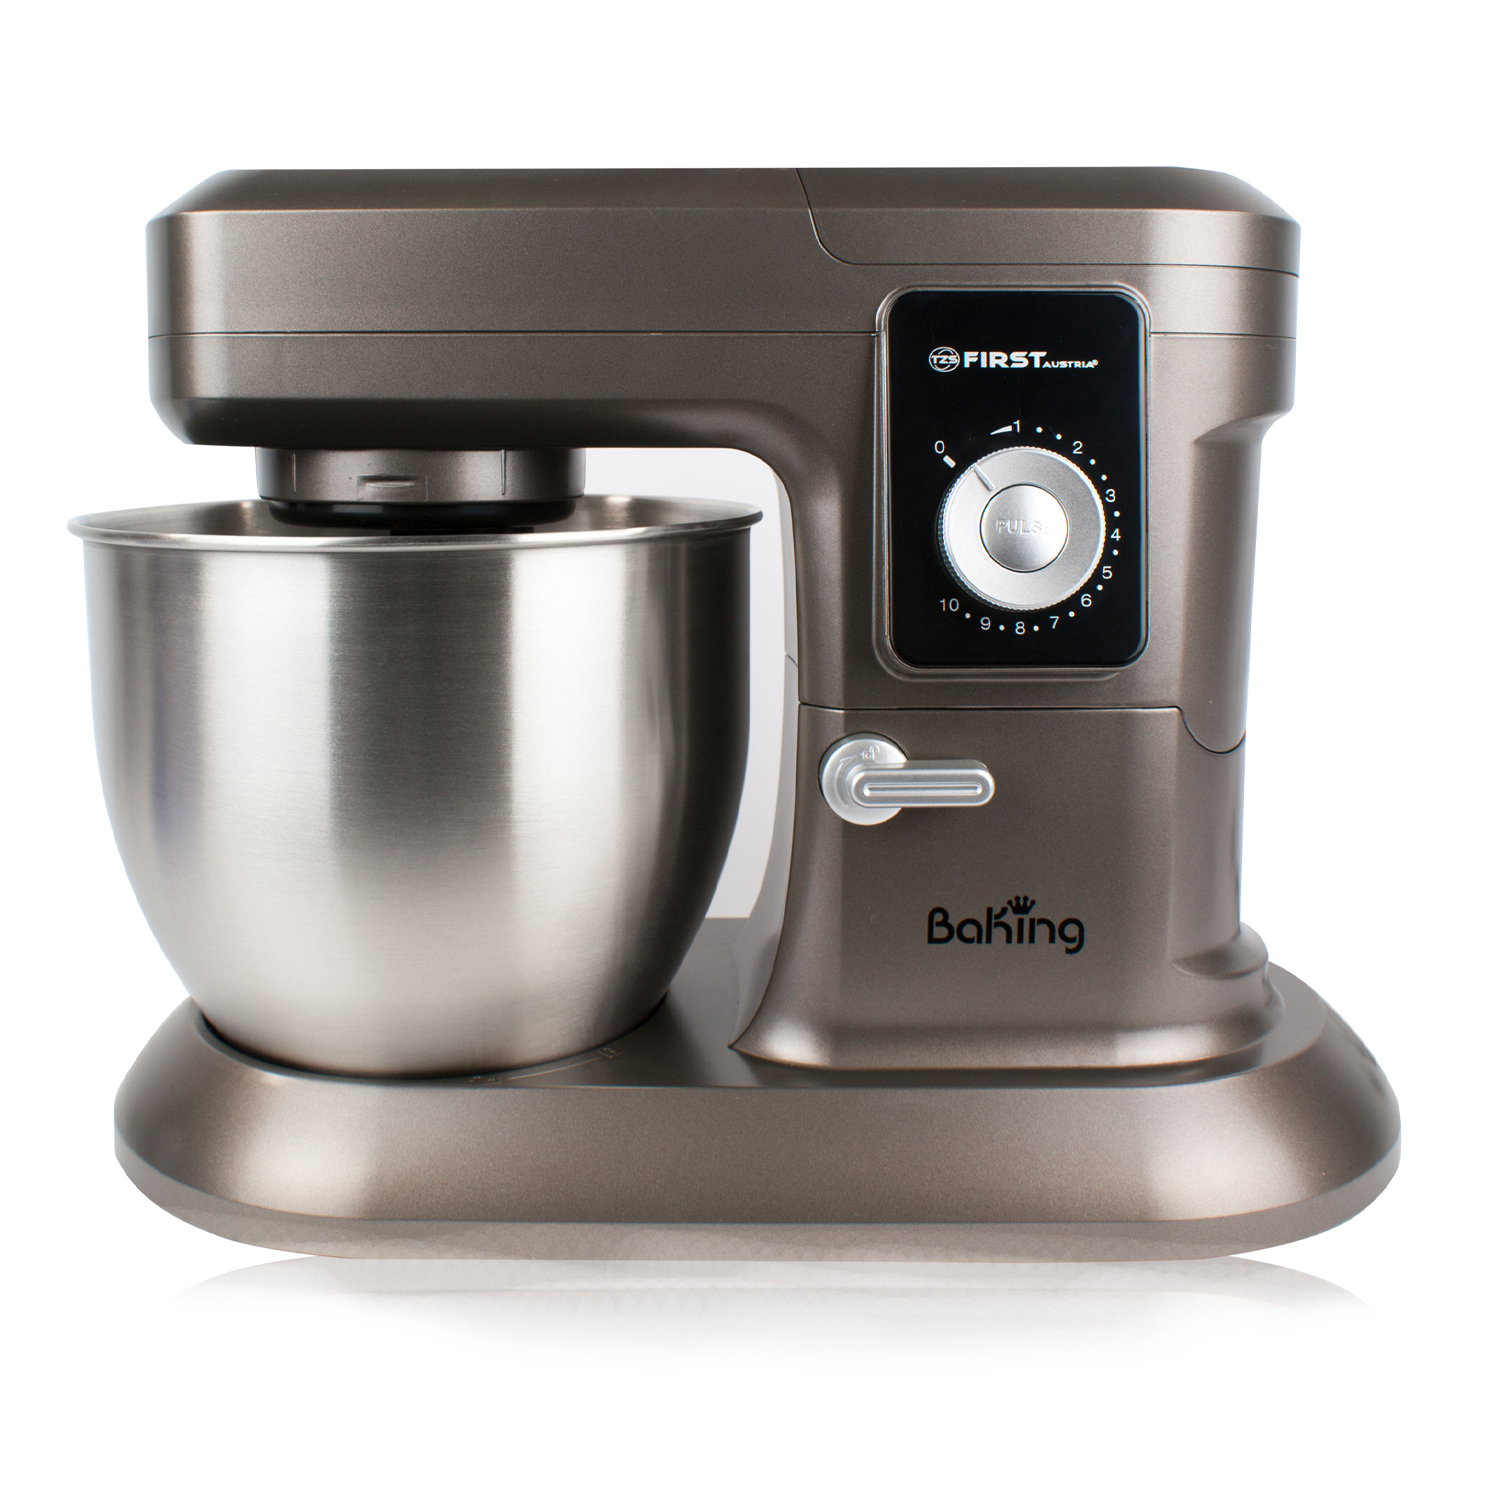 Dough kneading machine 1200 watts | 6.5 liter stainless steel bowl